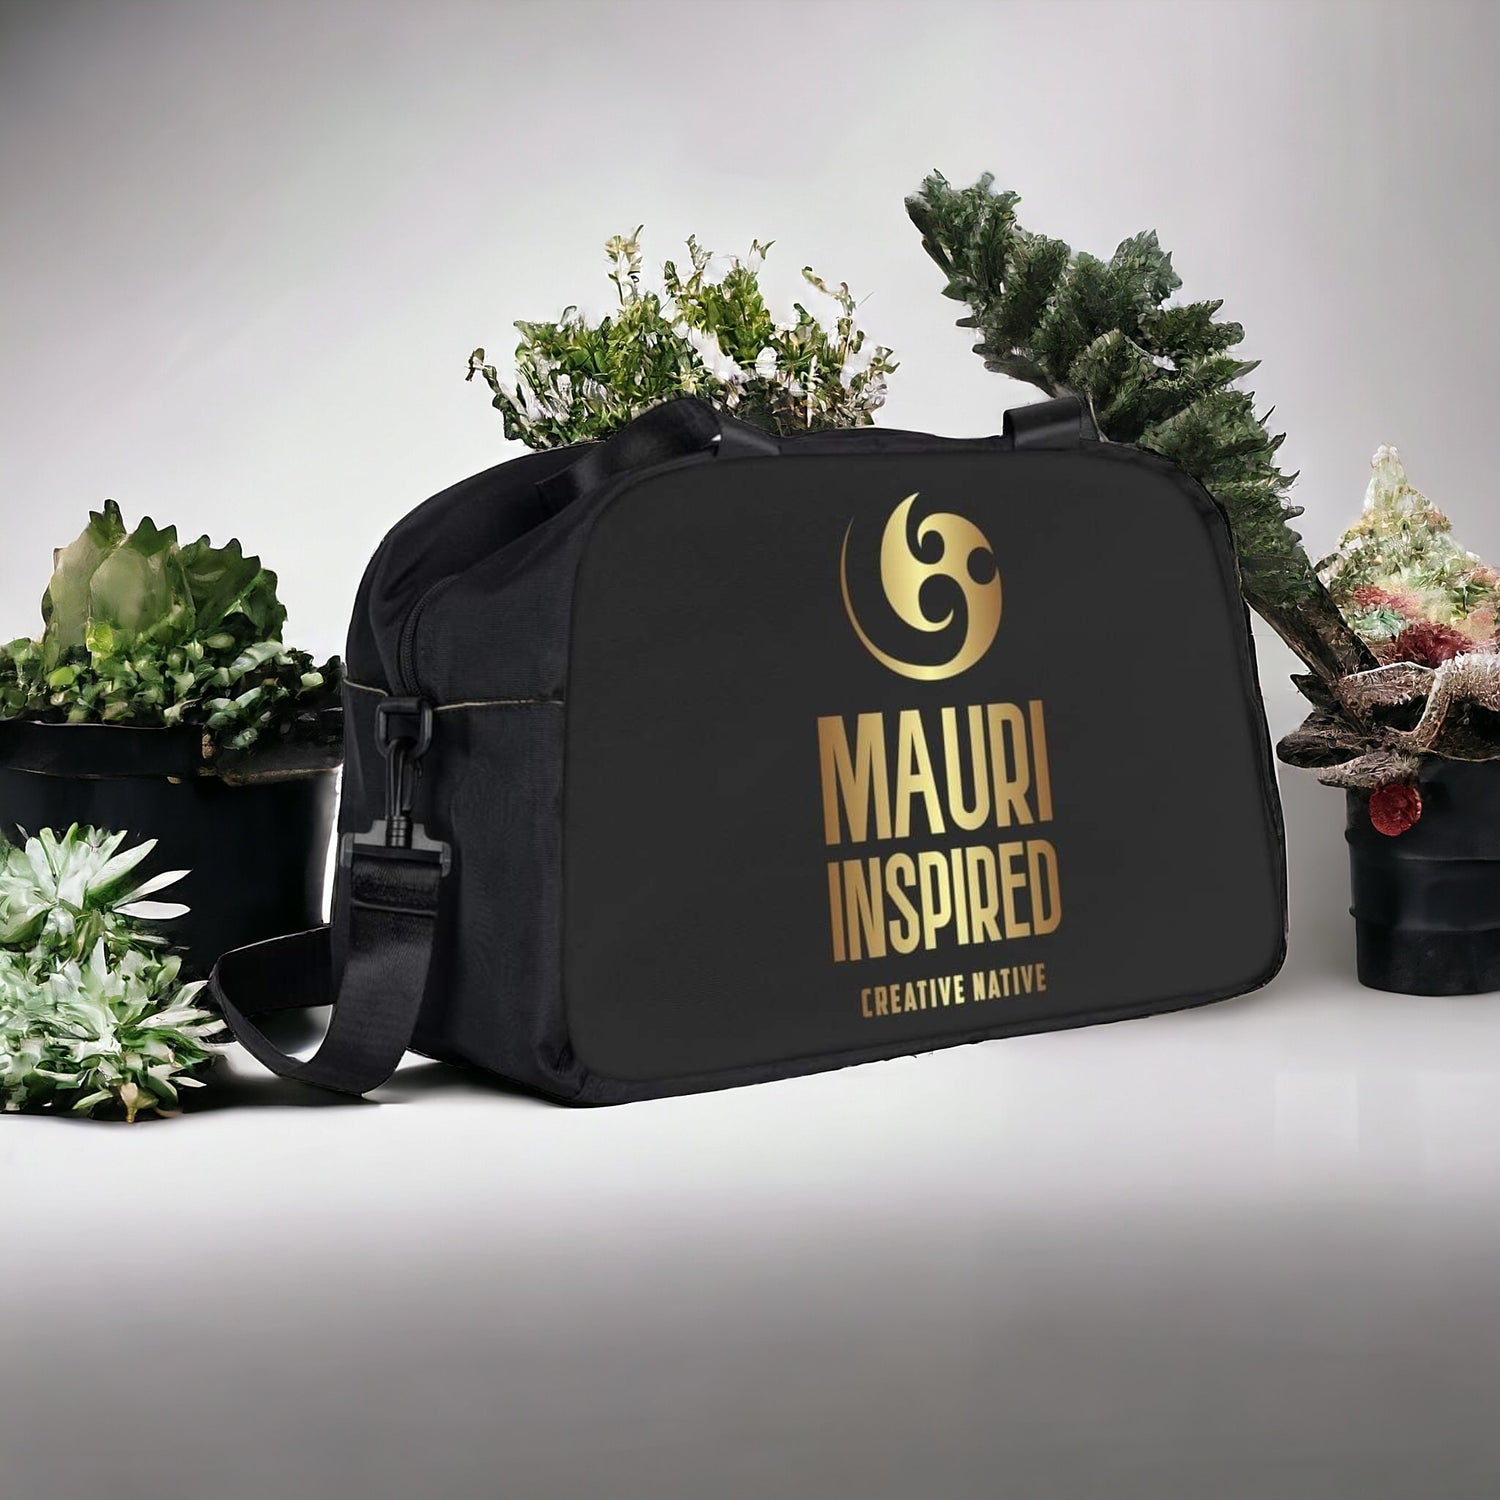 Mauri Inspired Bags